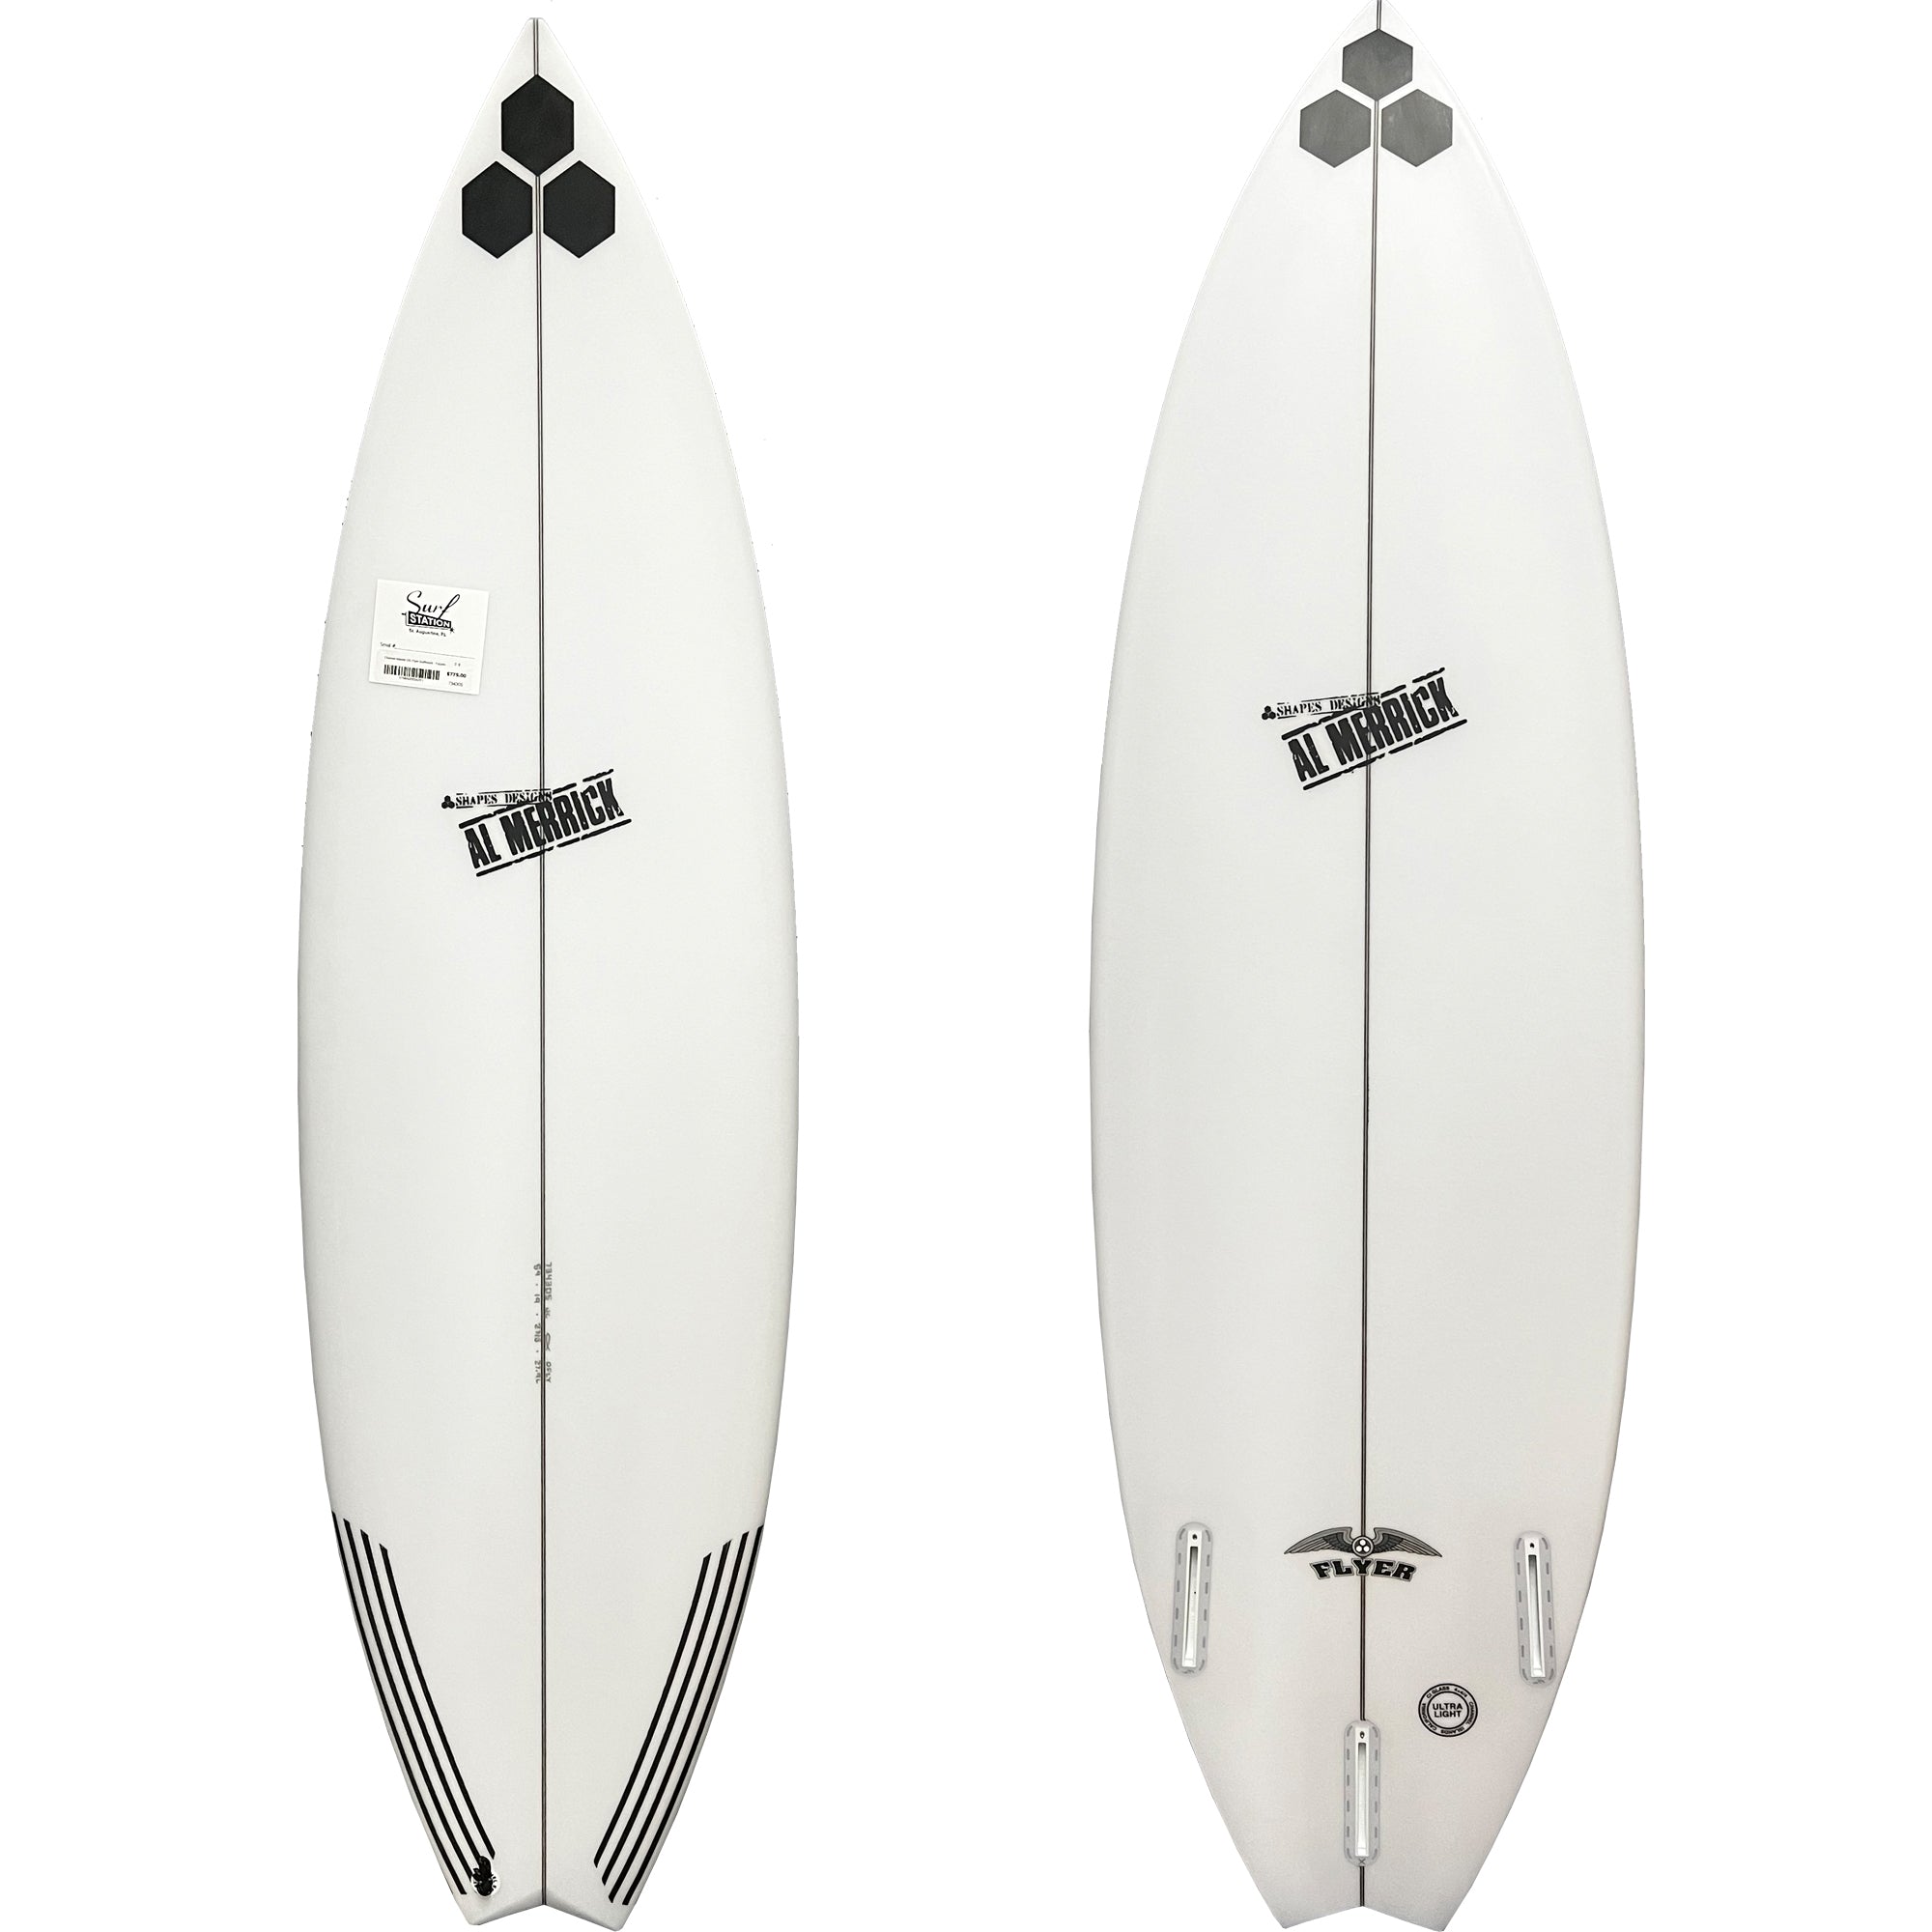 Channel Islands OG Flyer Swallow Surfboard - Futures